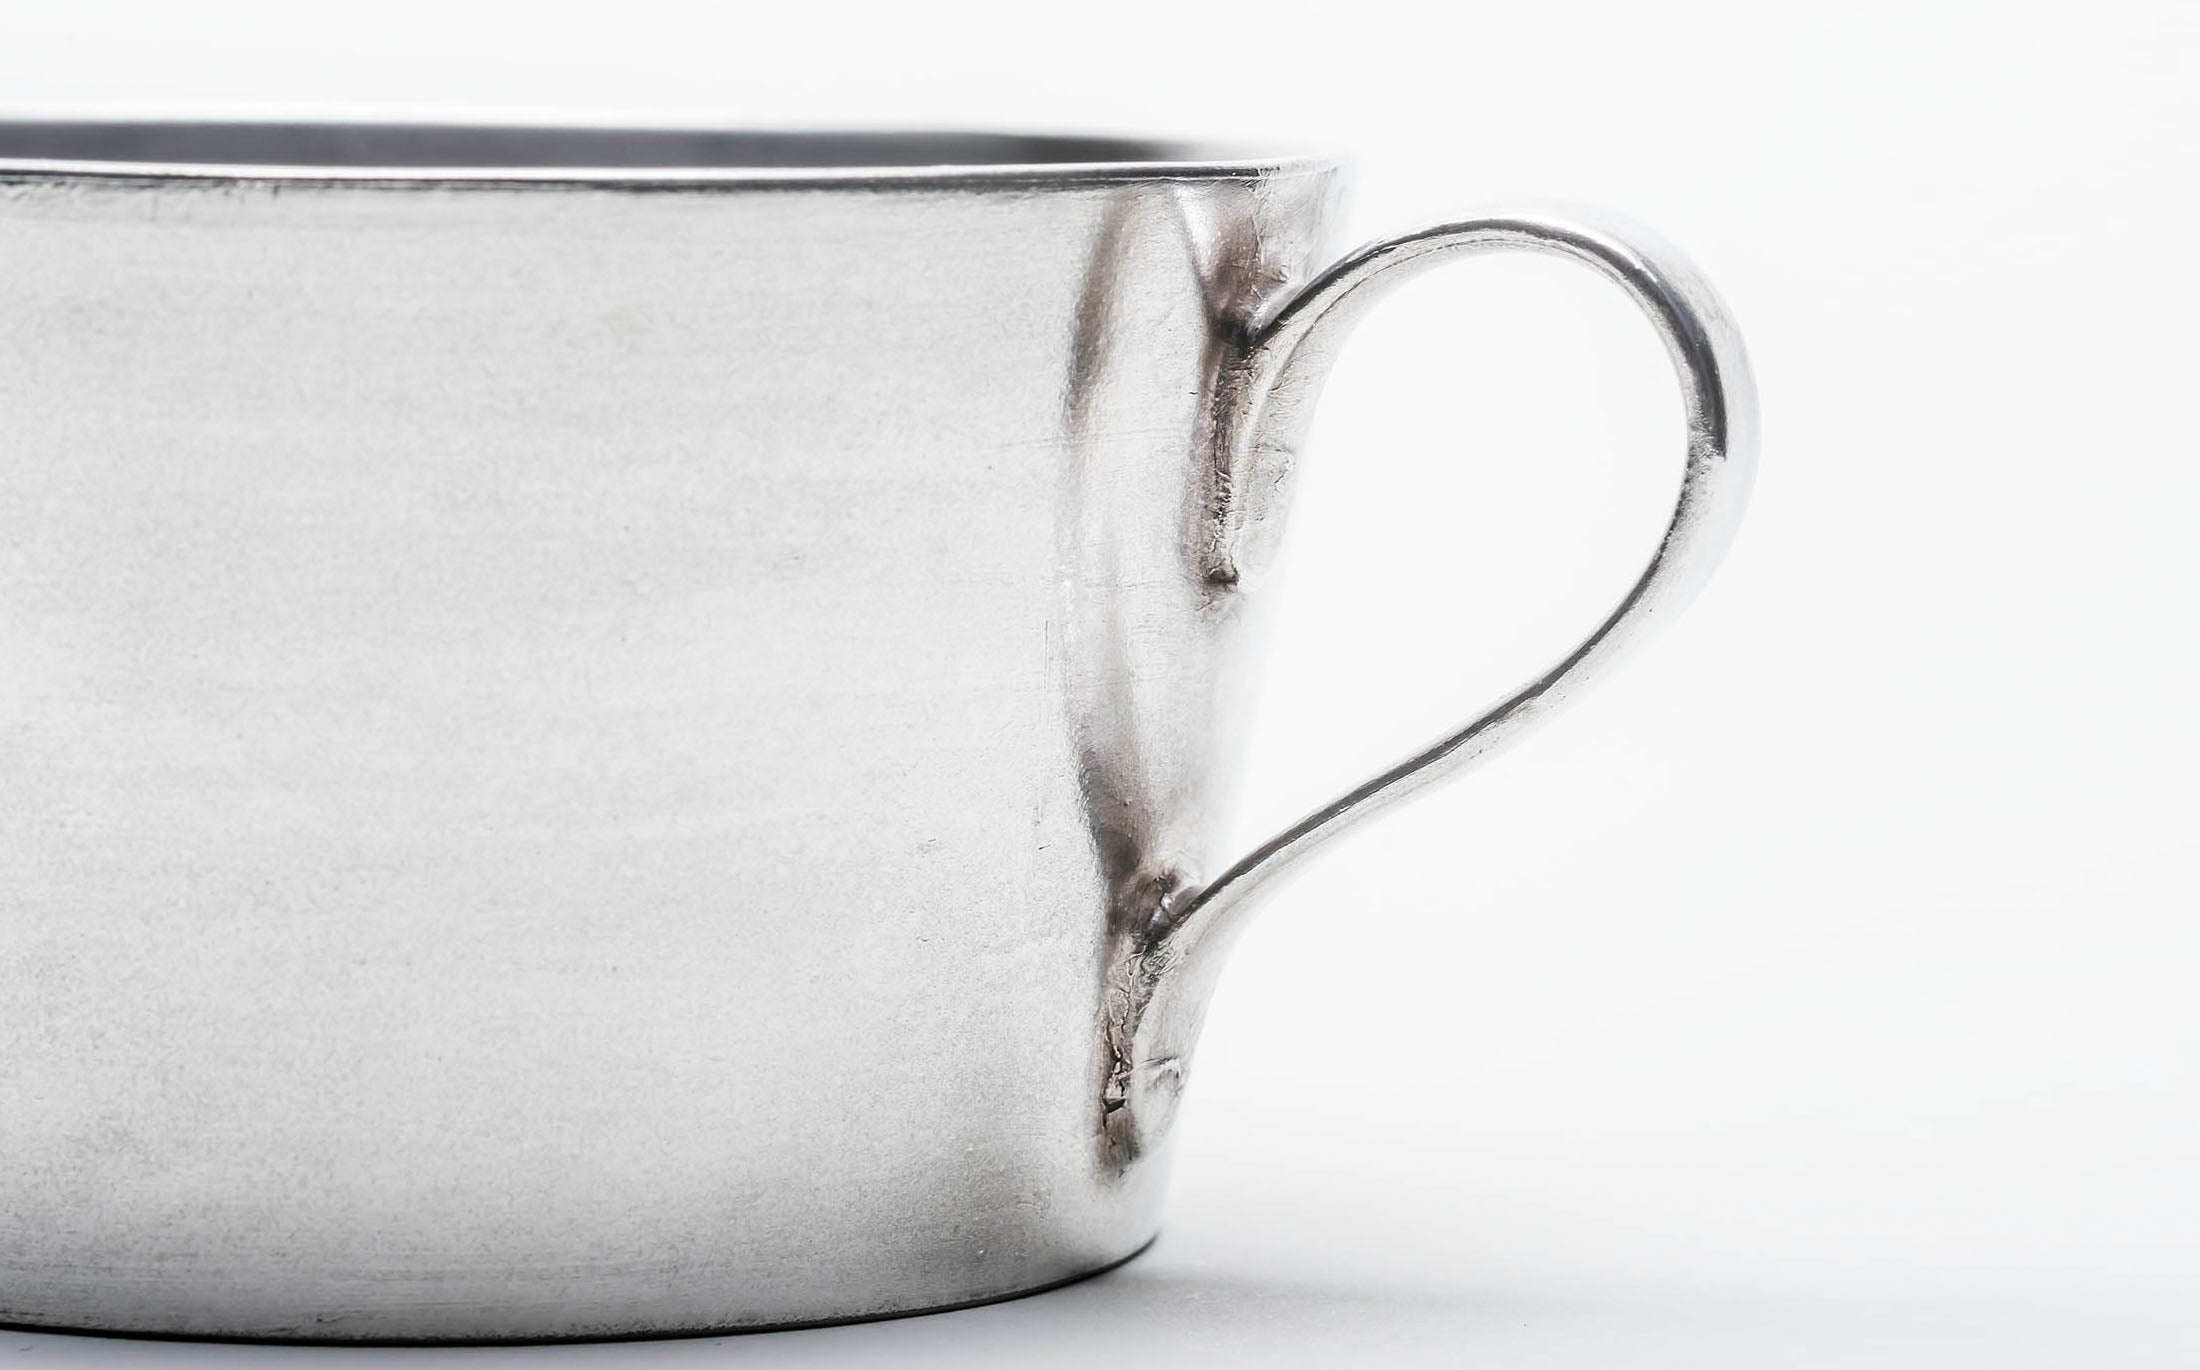 Shirotae - Silvered Porcelain - Tea Cup